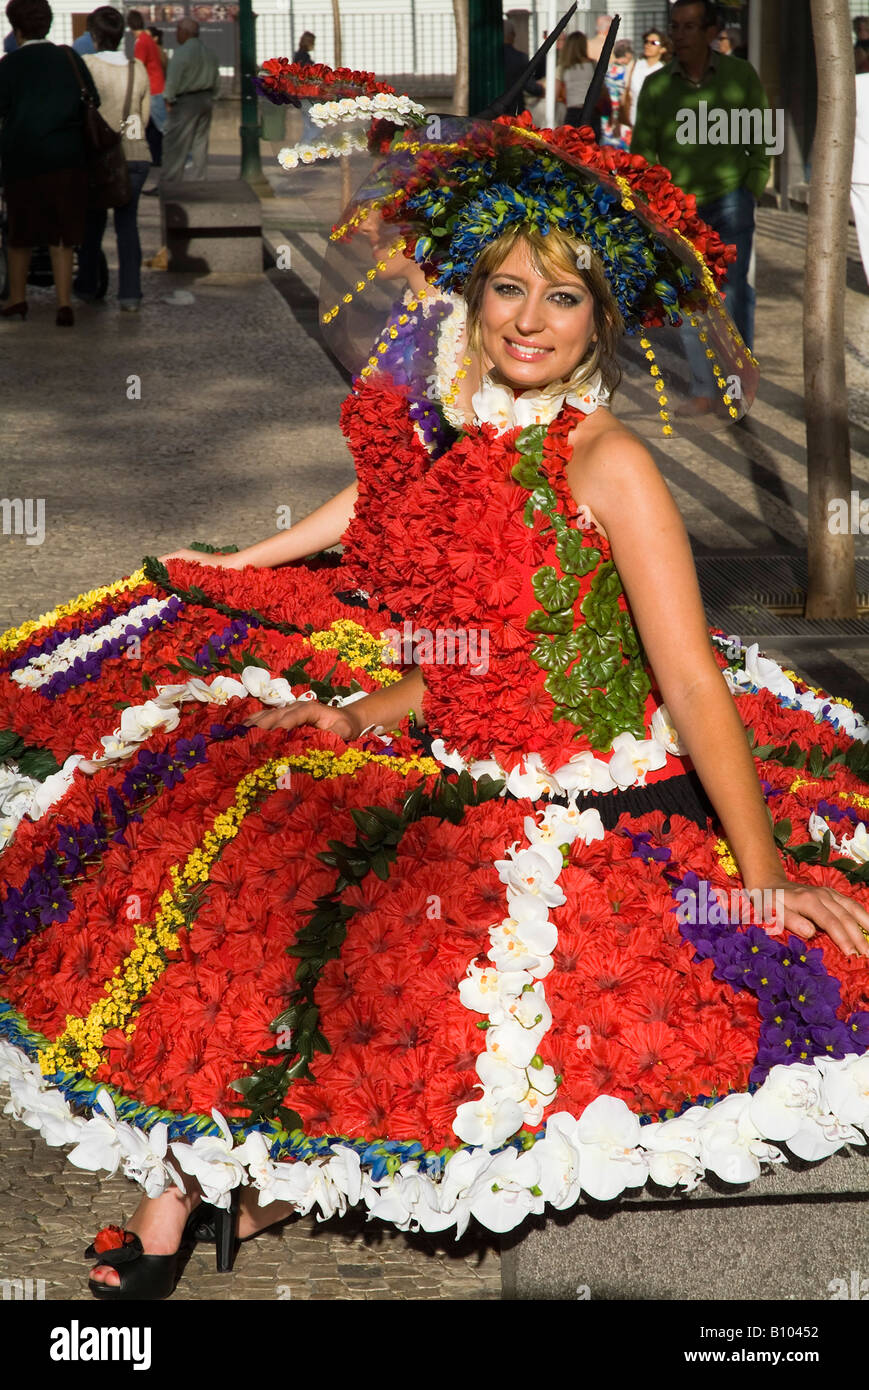 dh Flower Festival FUNCHAL MADEIRA Festival girl in flower costume posing Avenida Arriaga city street girls dress beautiful woman Stock Photo